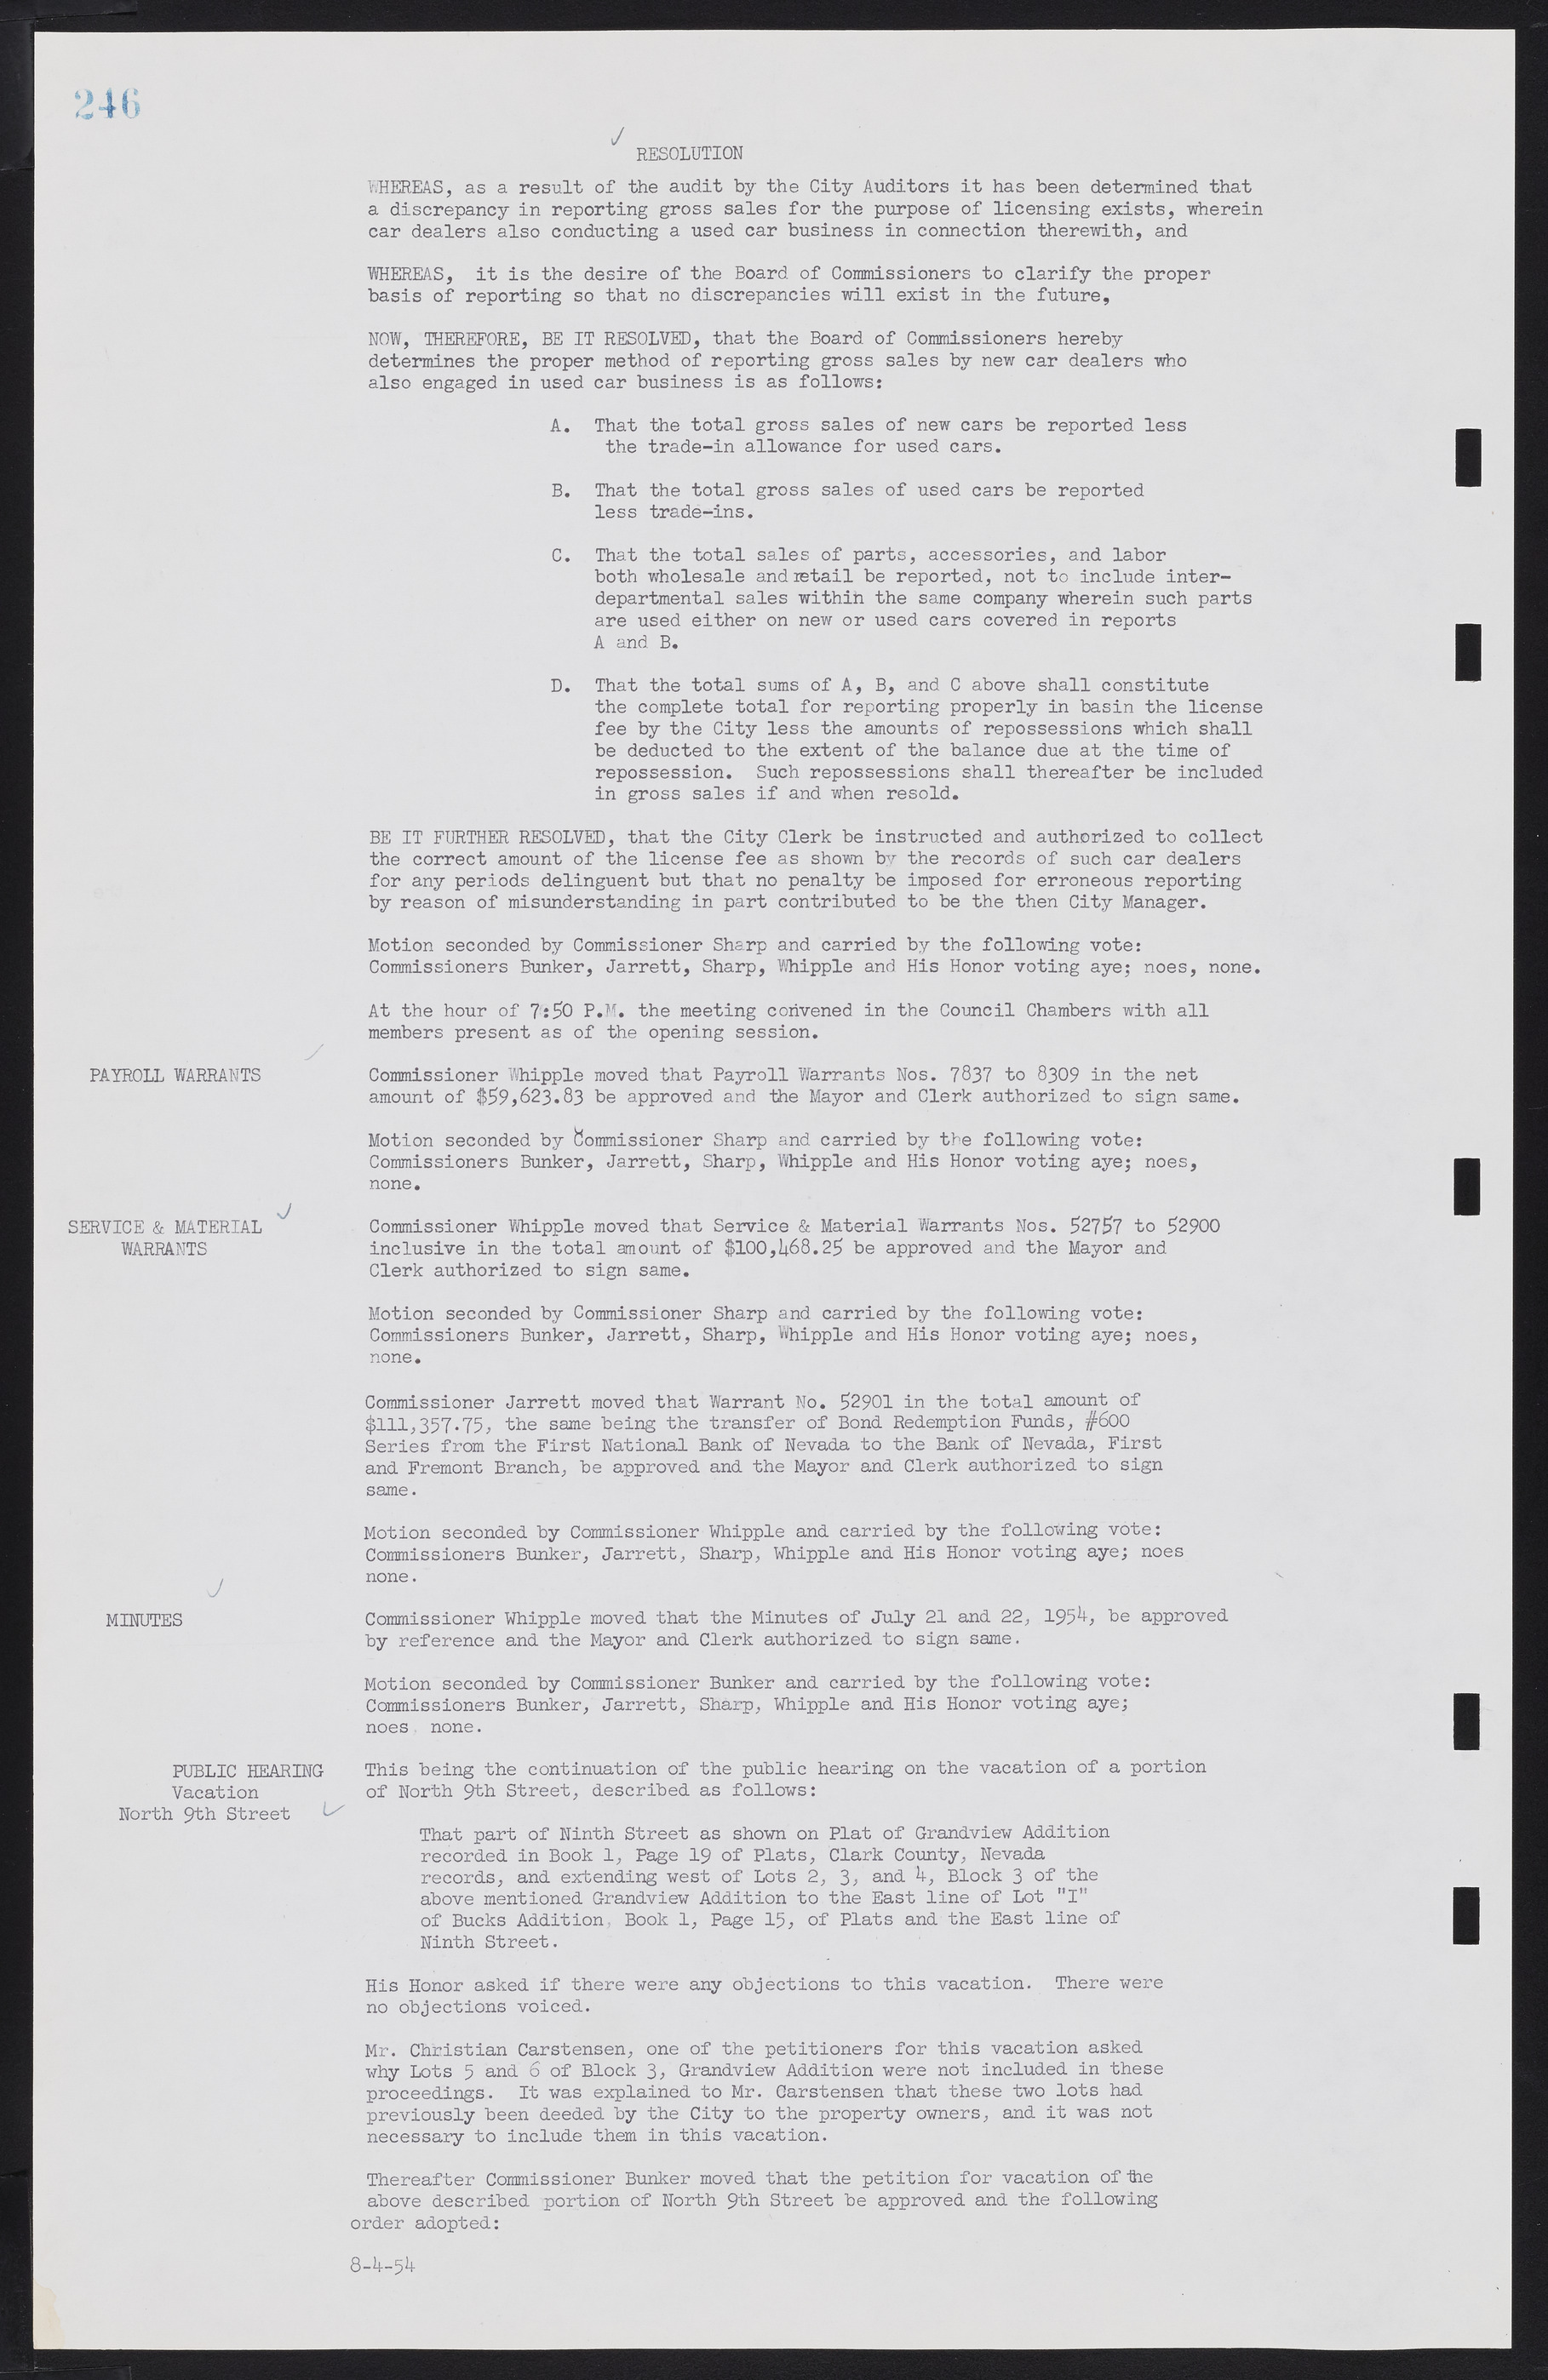 Las Vegas City Commission Minutes, February 17, 1954 to September 21, 1955, lvc000009-252